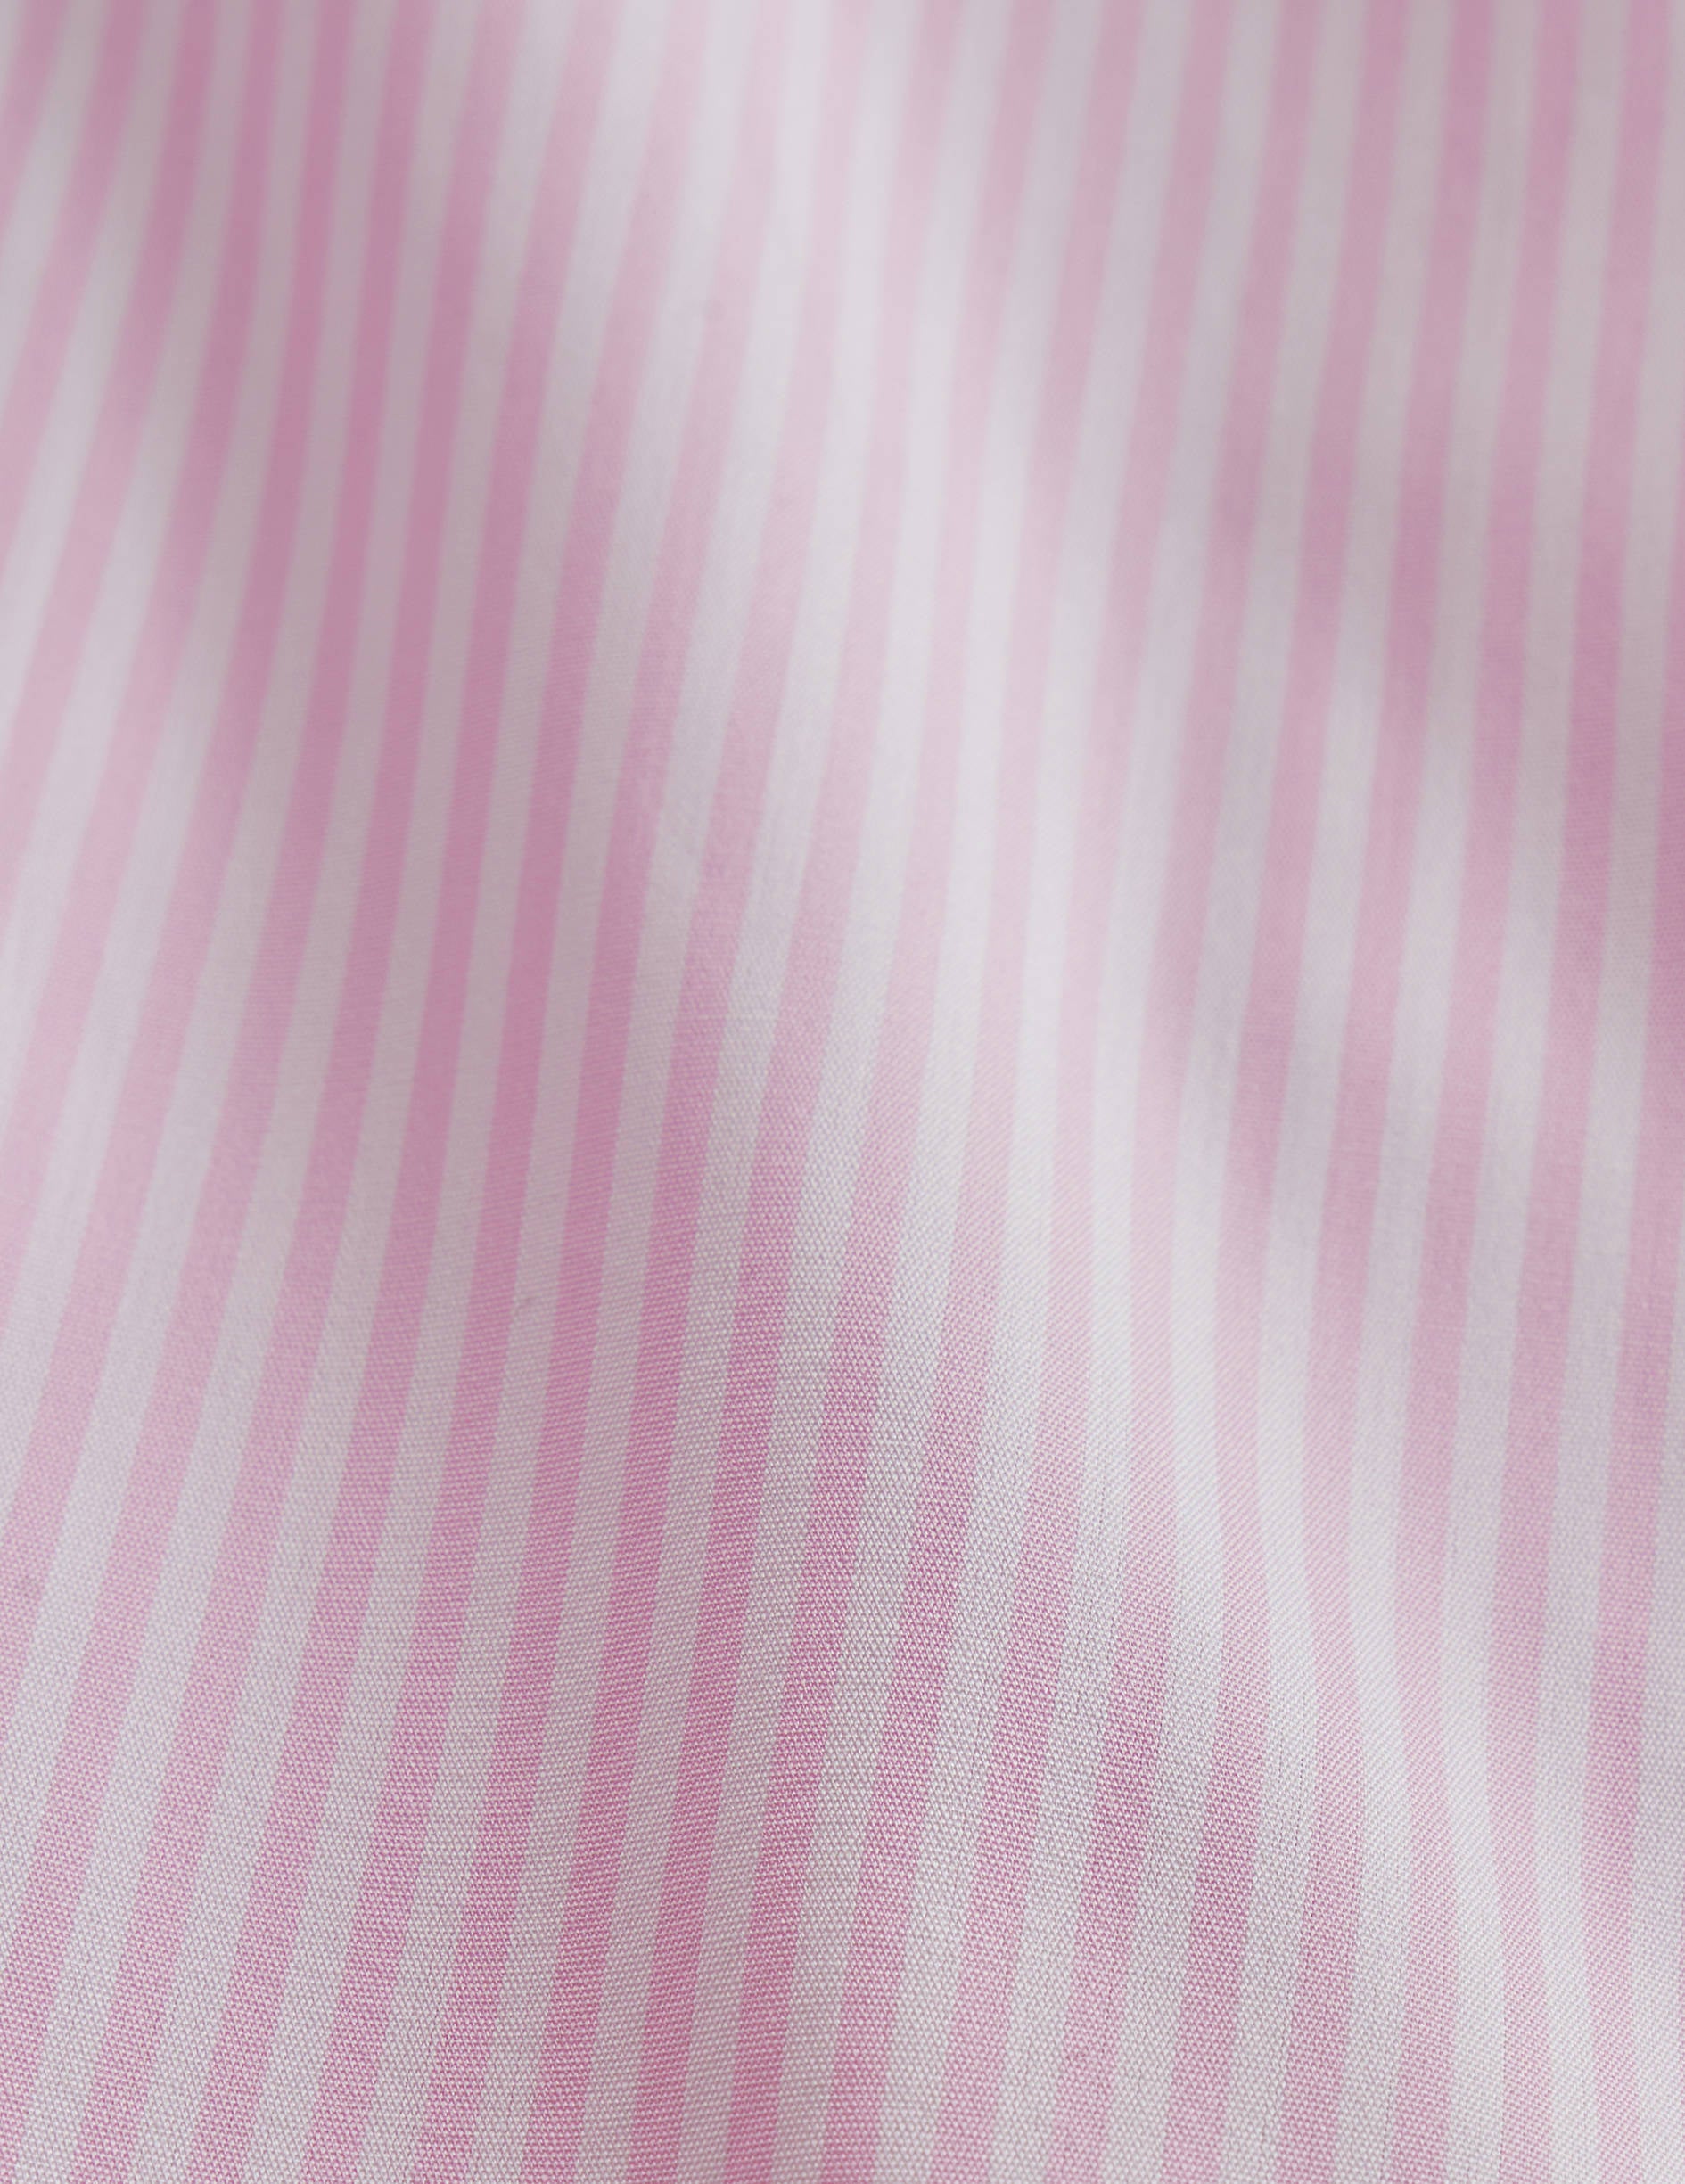 Fitted pink striped shirt - Poplin - Italian Collar